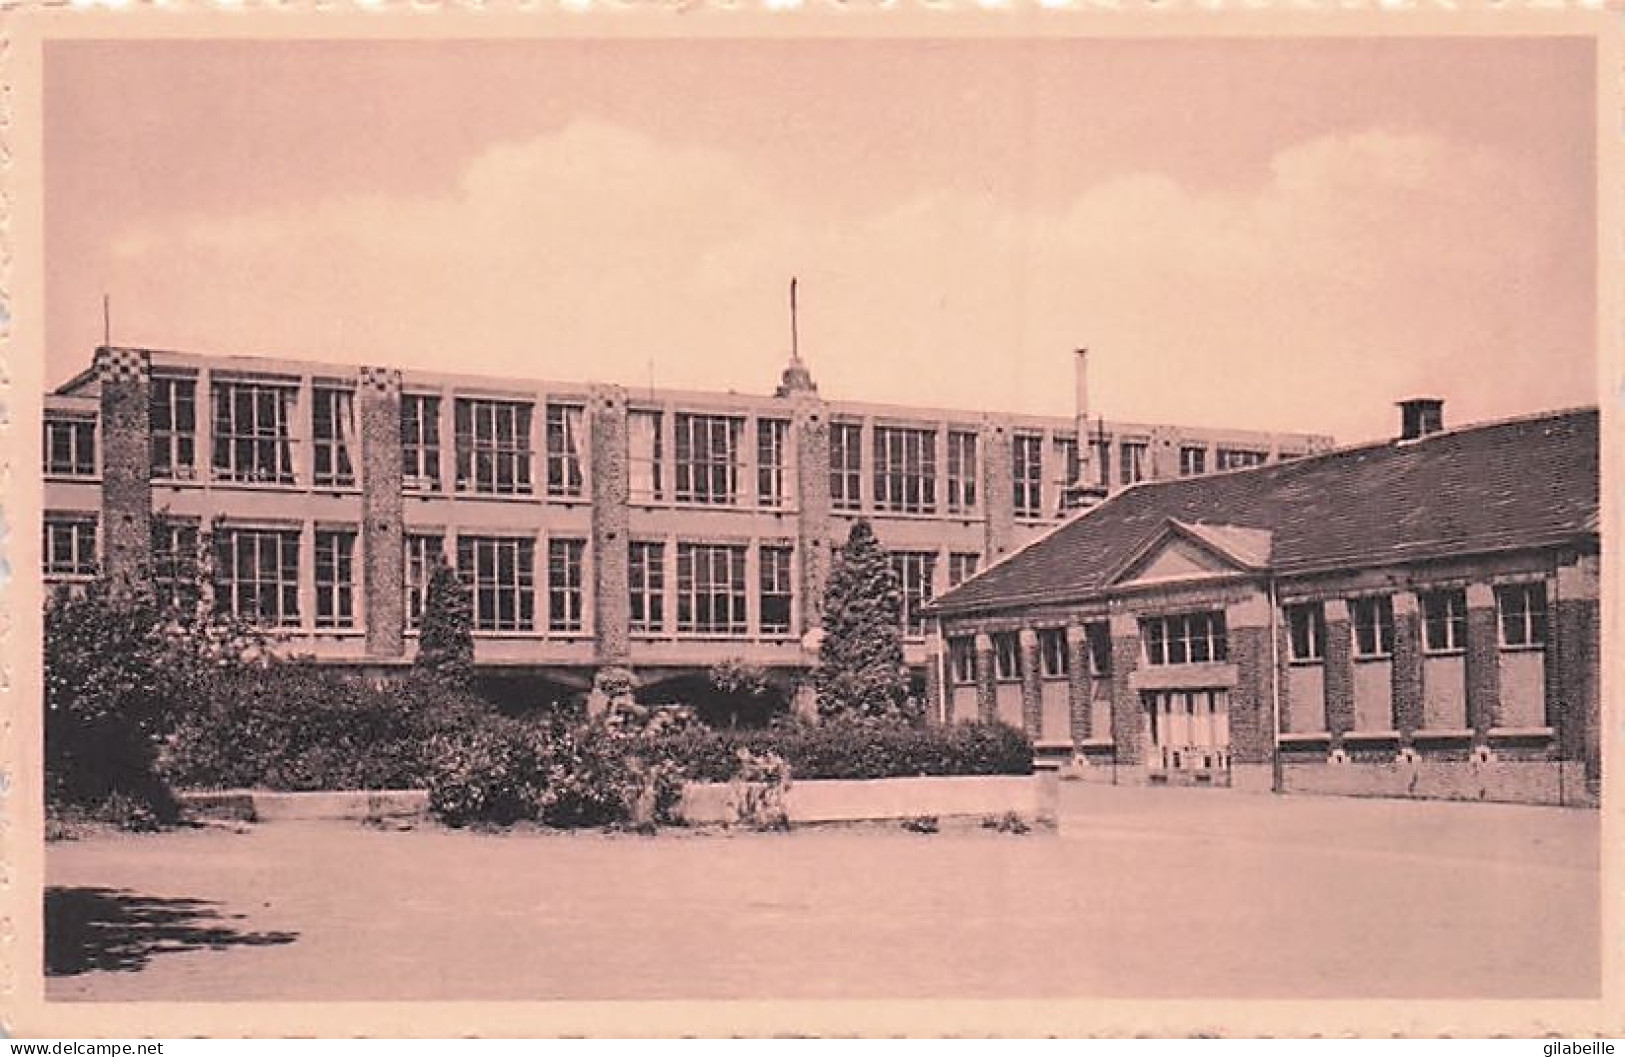 Saint Nicolas - MONTEGNEE - école Fleurie - Saint-Nicolas